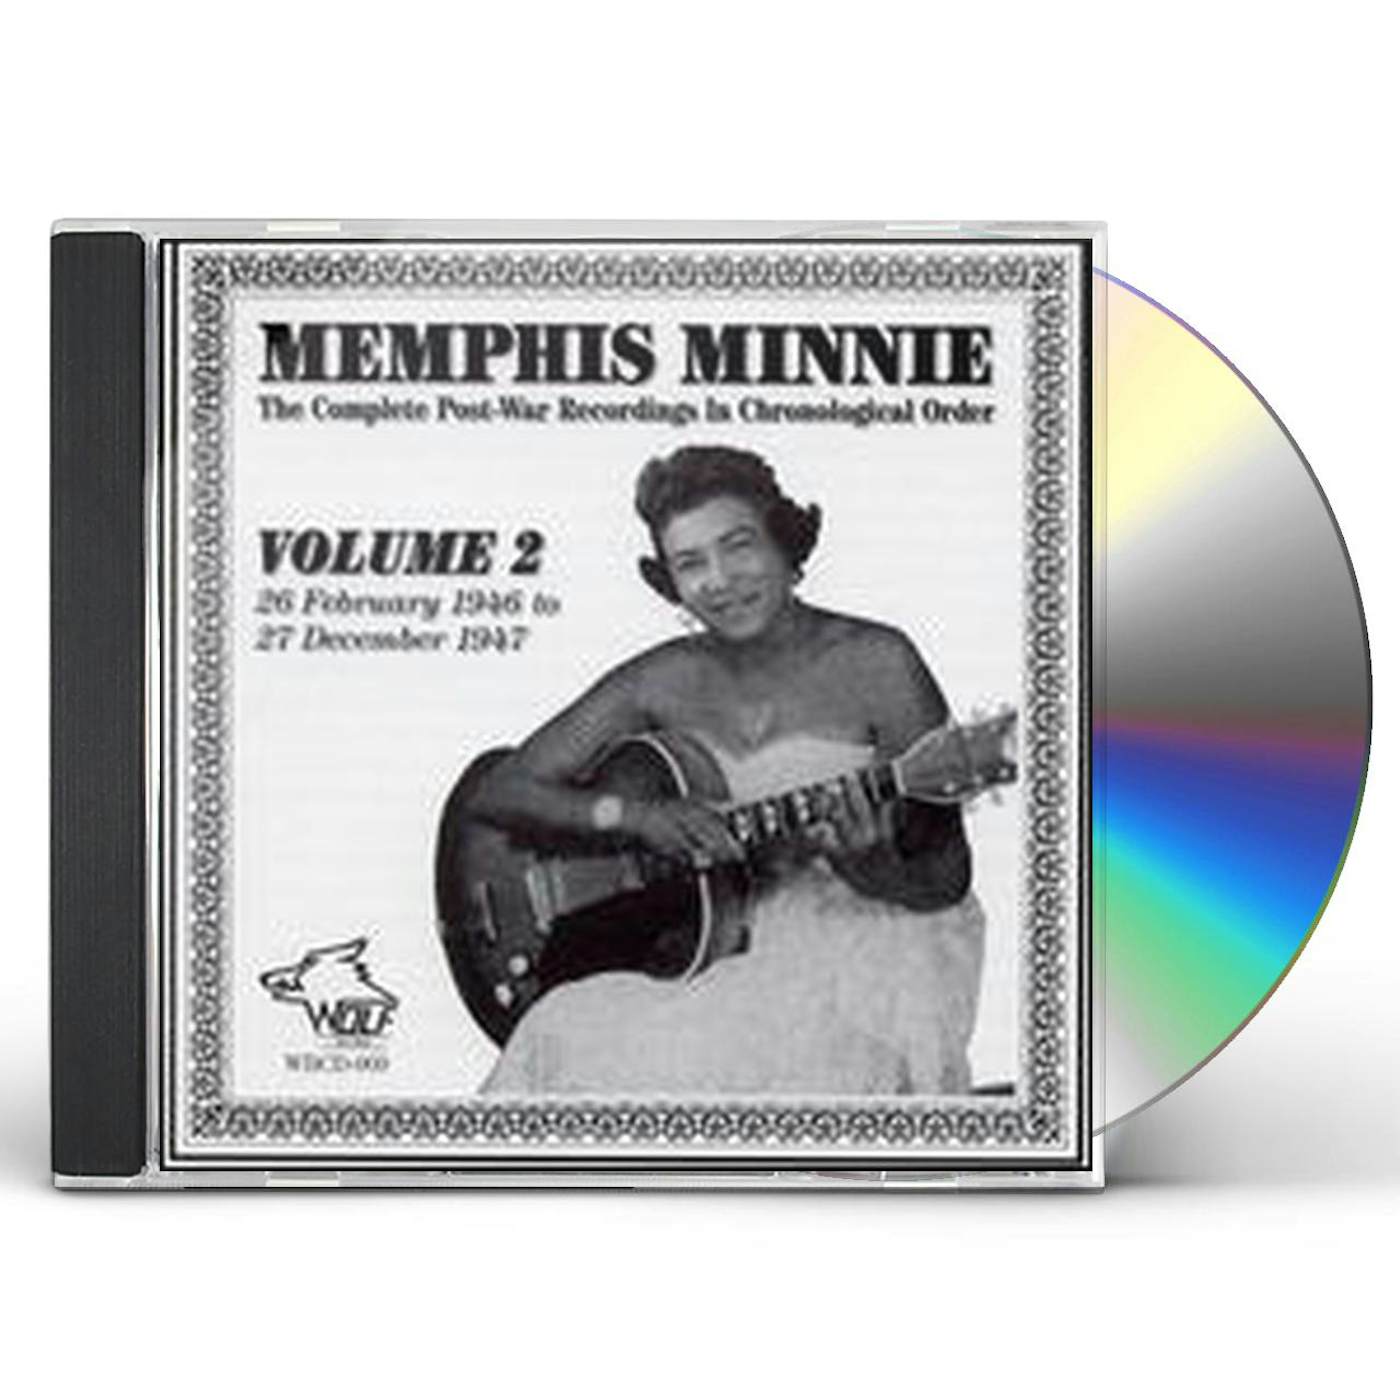 Memphis Minnie 1946-1947 COMPLETE RECORDINGS 2 CD